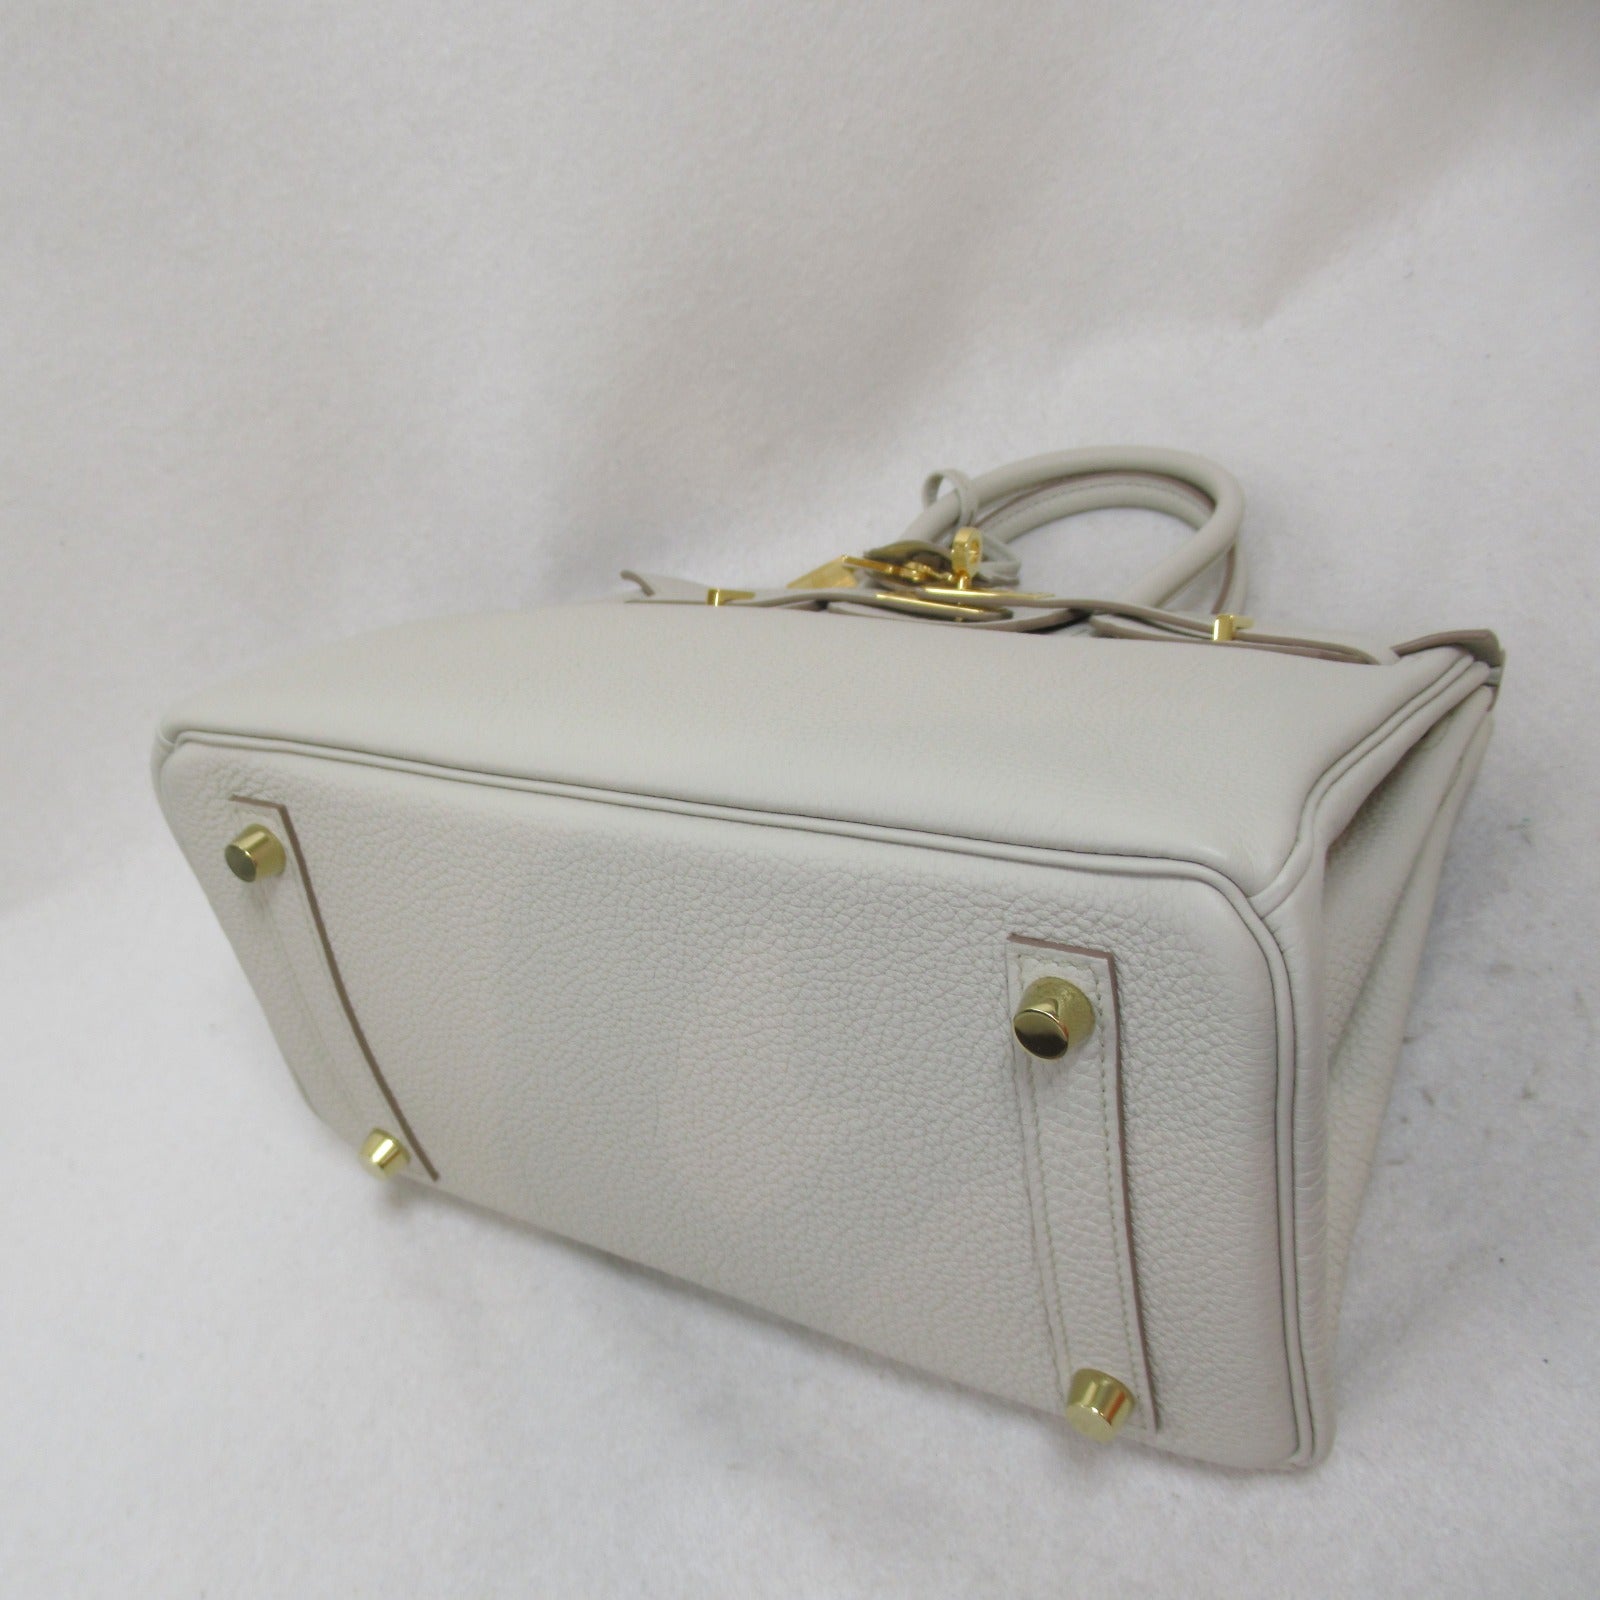 Hermes Birkin 25 Vietnamese Handbag Handbag Handbag Leather Togo  White